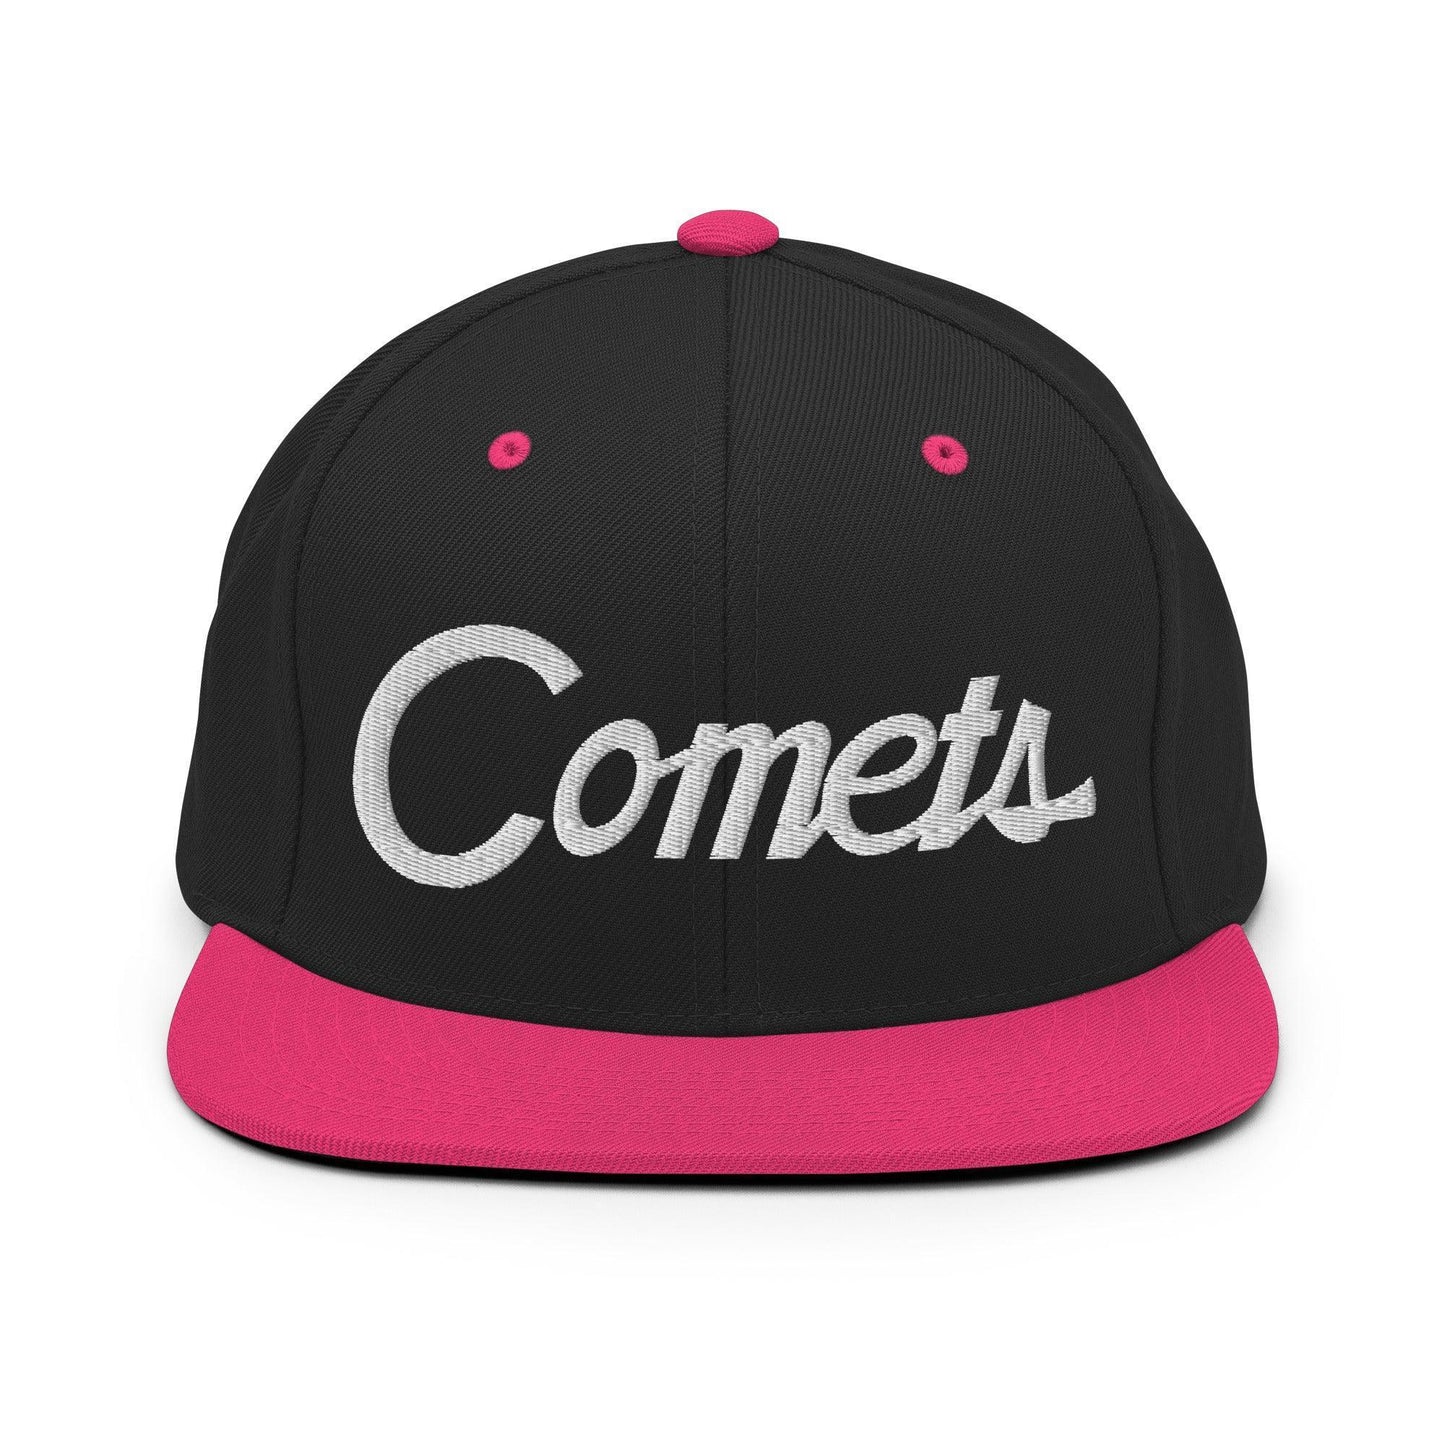 Comets School Mascot Script Snapback Hat Black Neon Pink